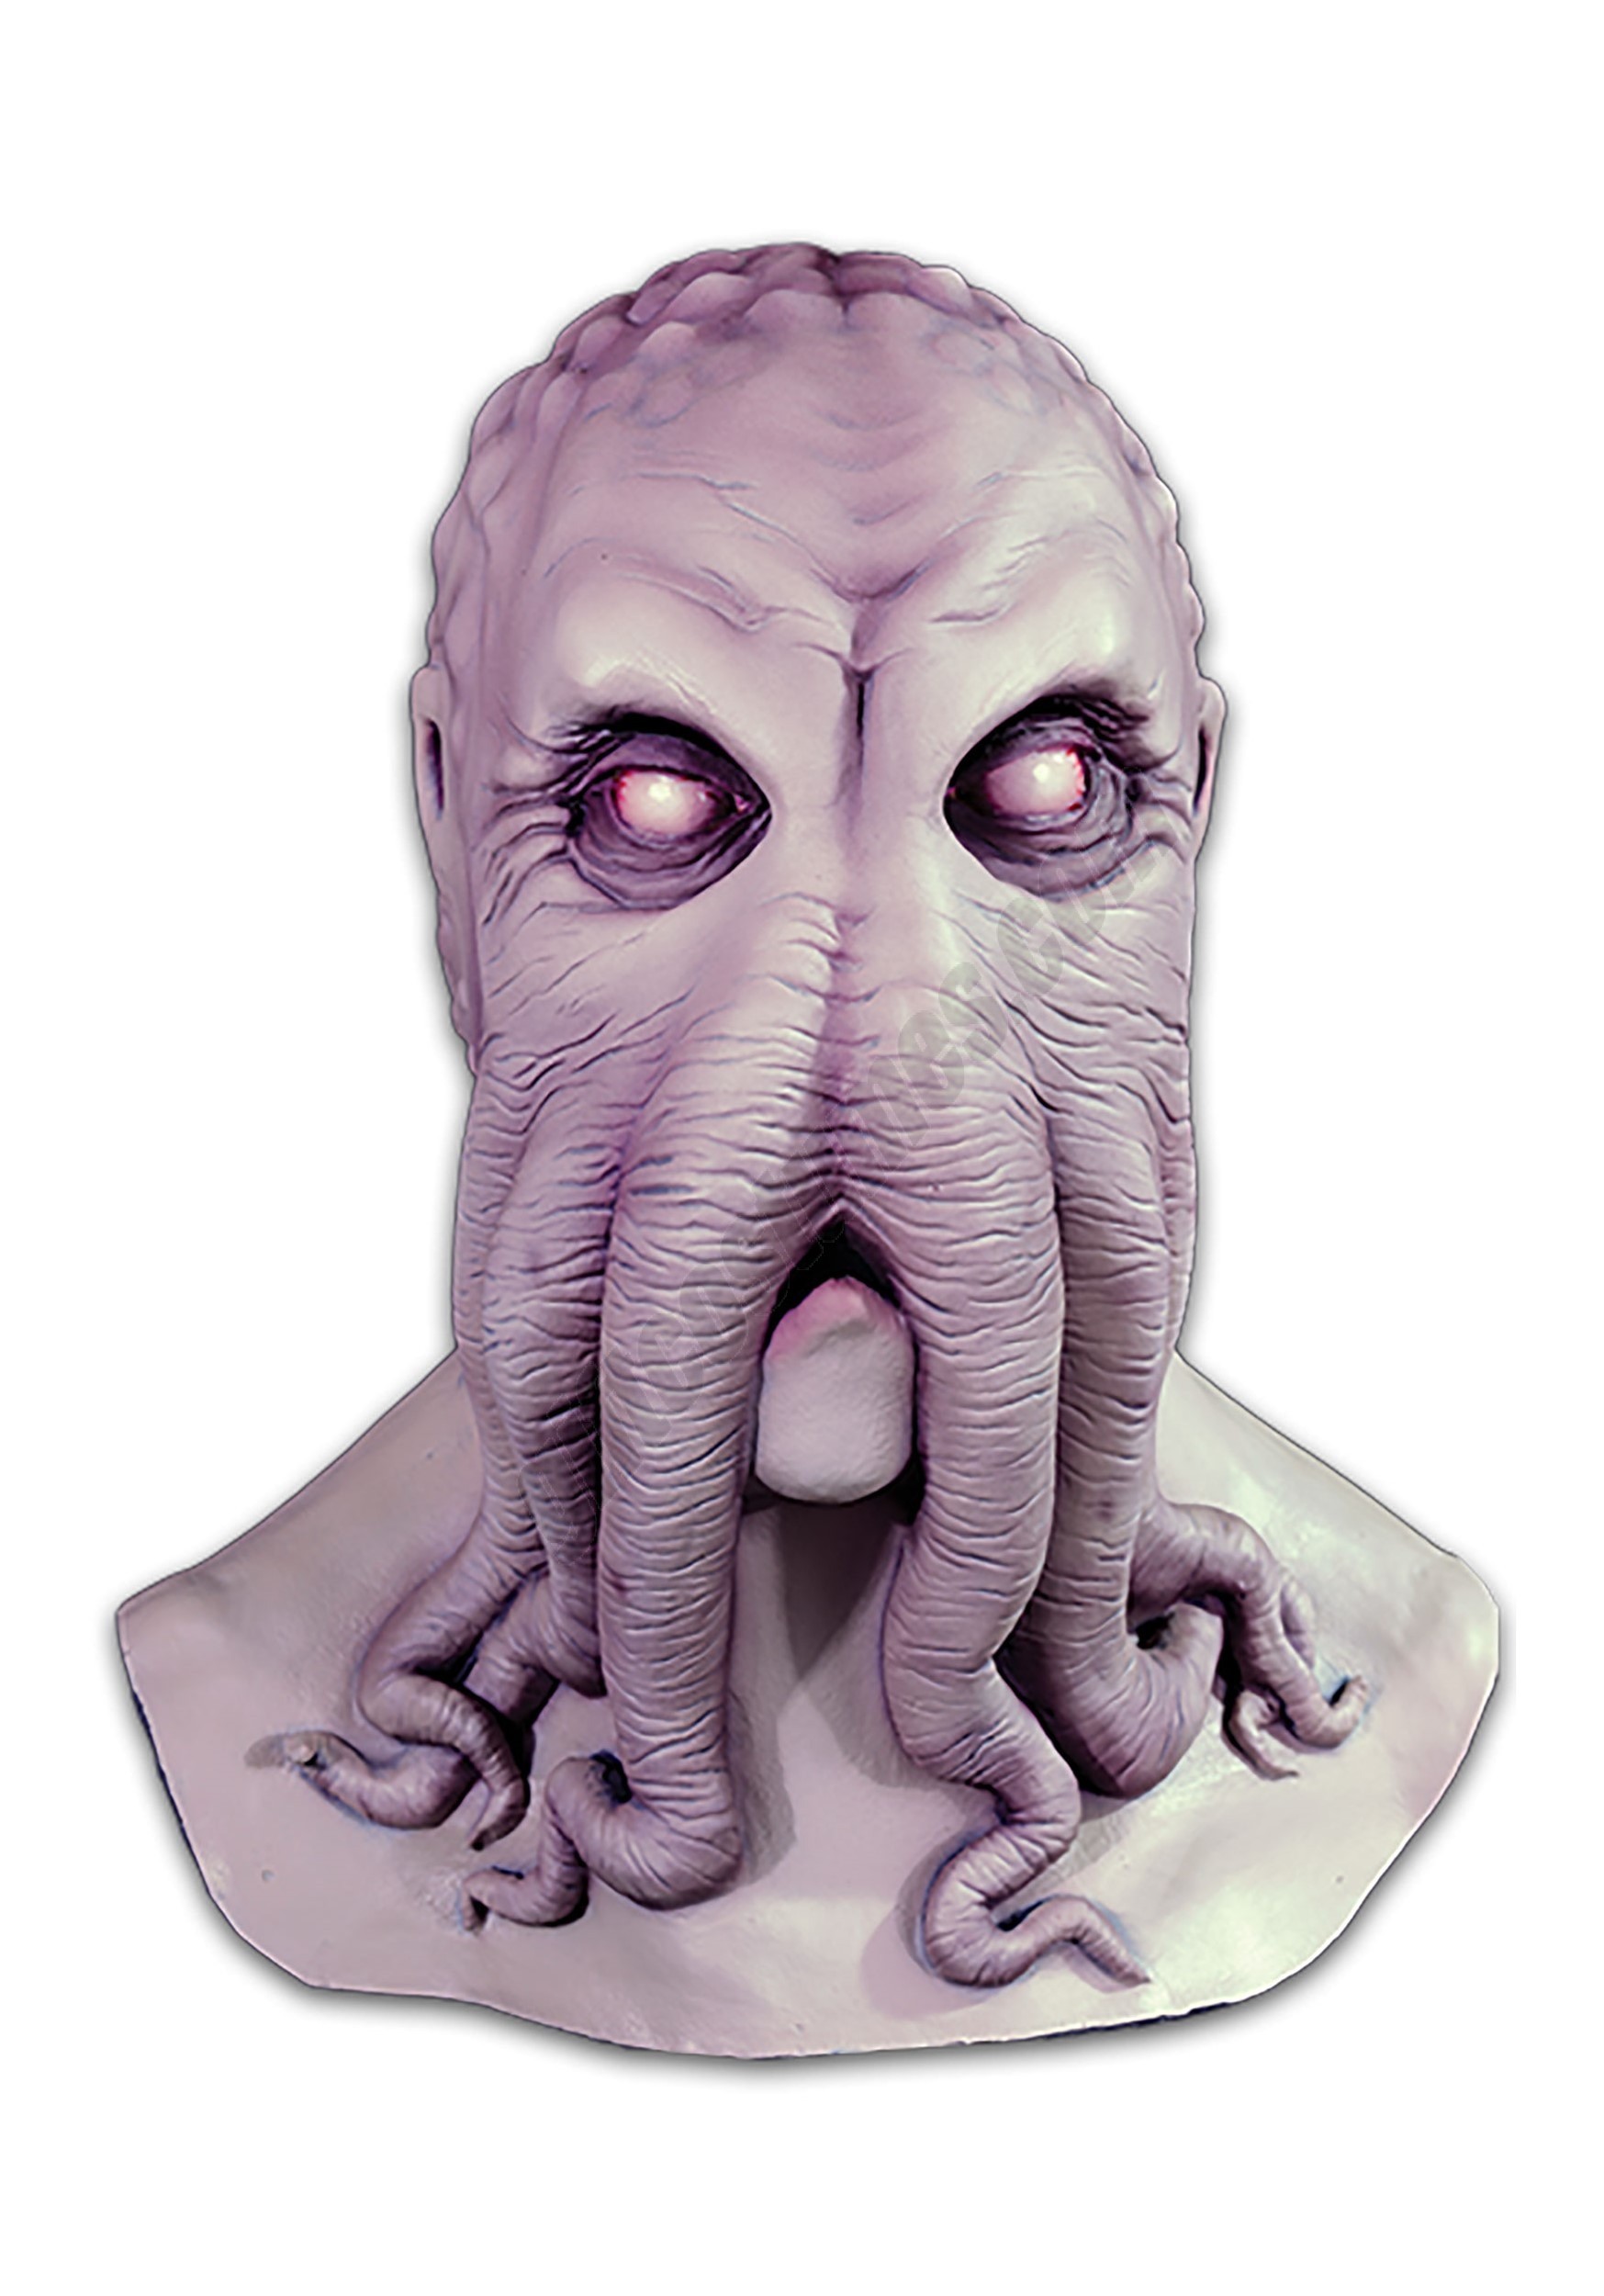 Death Studios Lovecraft Cthulhu Mask Promotions - Death Studios Lovecraft Cthulhu Mask Promotions